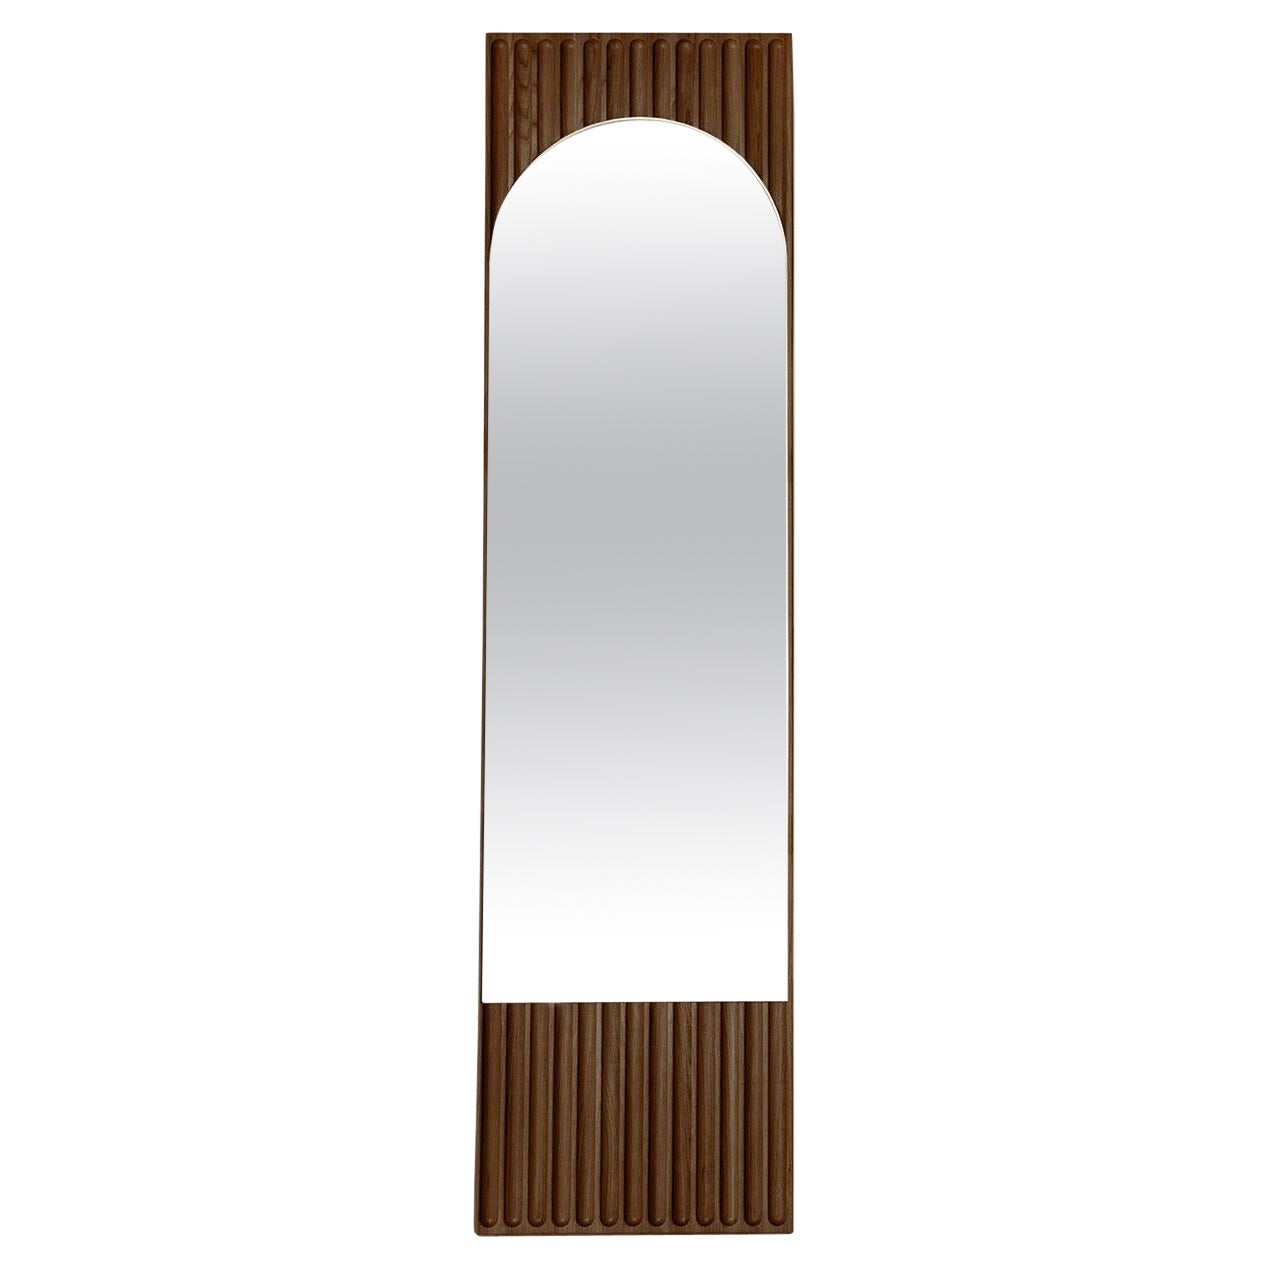 Tutto Sesto Solid Wood Rectangular Mirror, Ash in Brown Finish, Contemporary